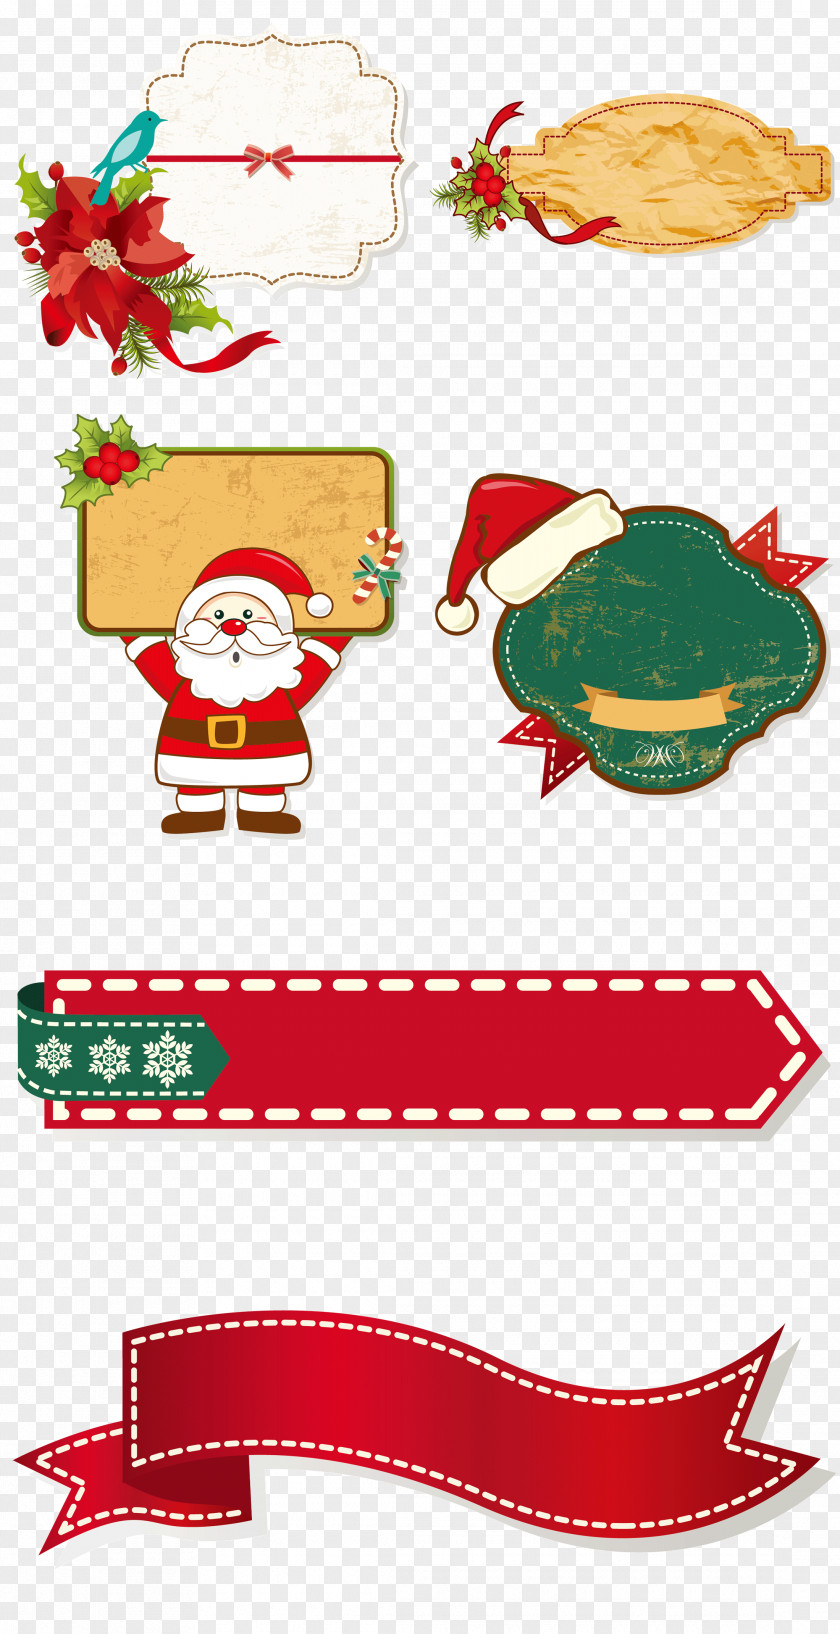 Cartoon Christmas Border Collection Santa Claus Decoration Clip Art PNG